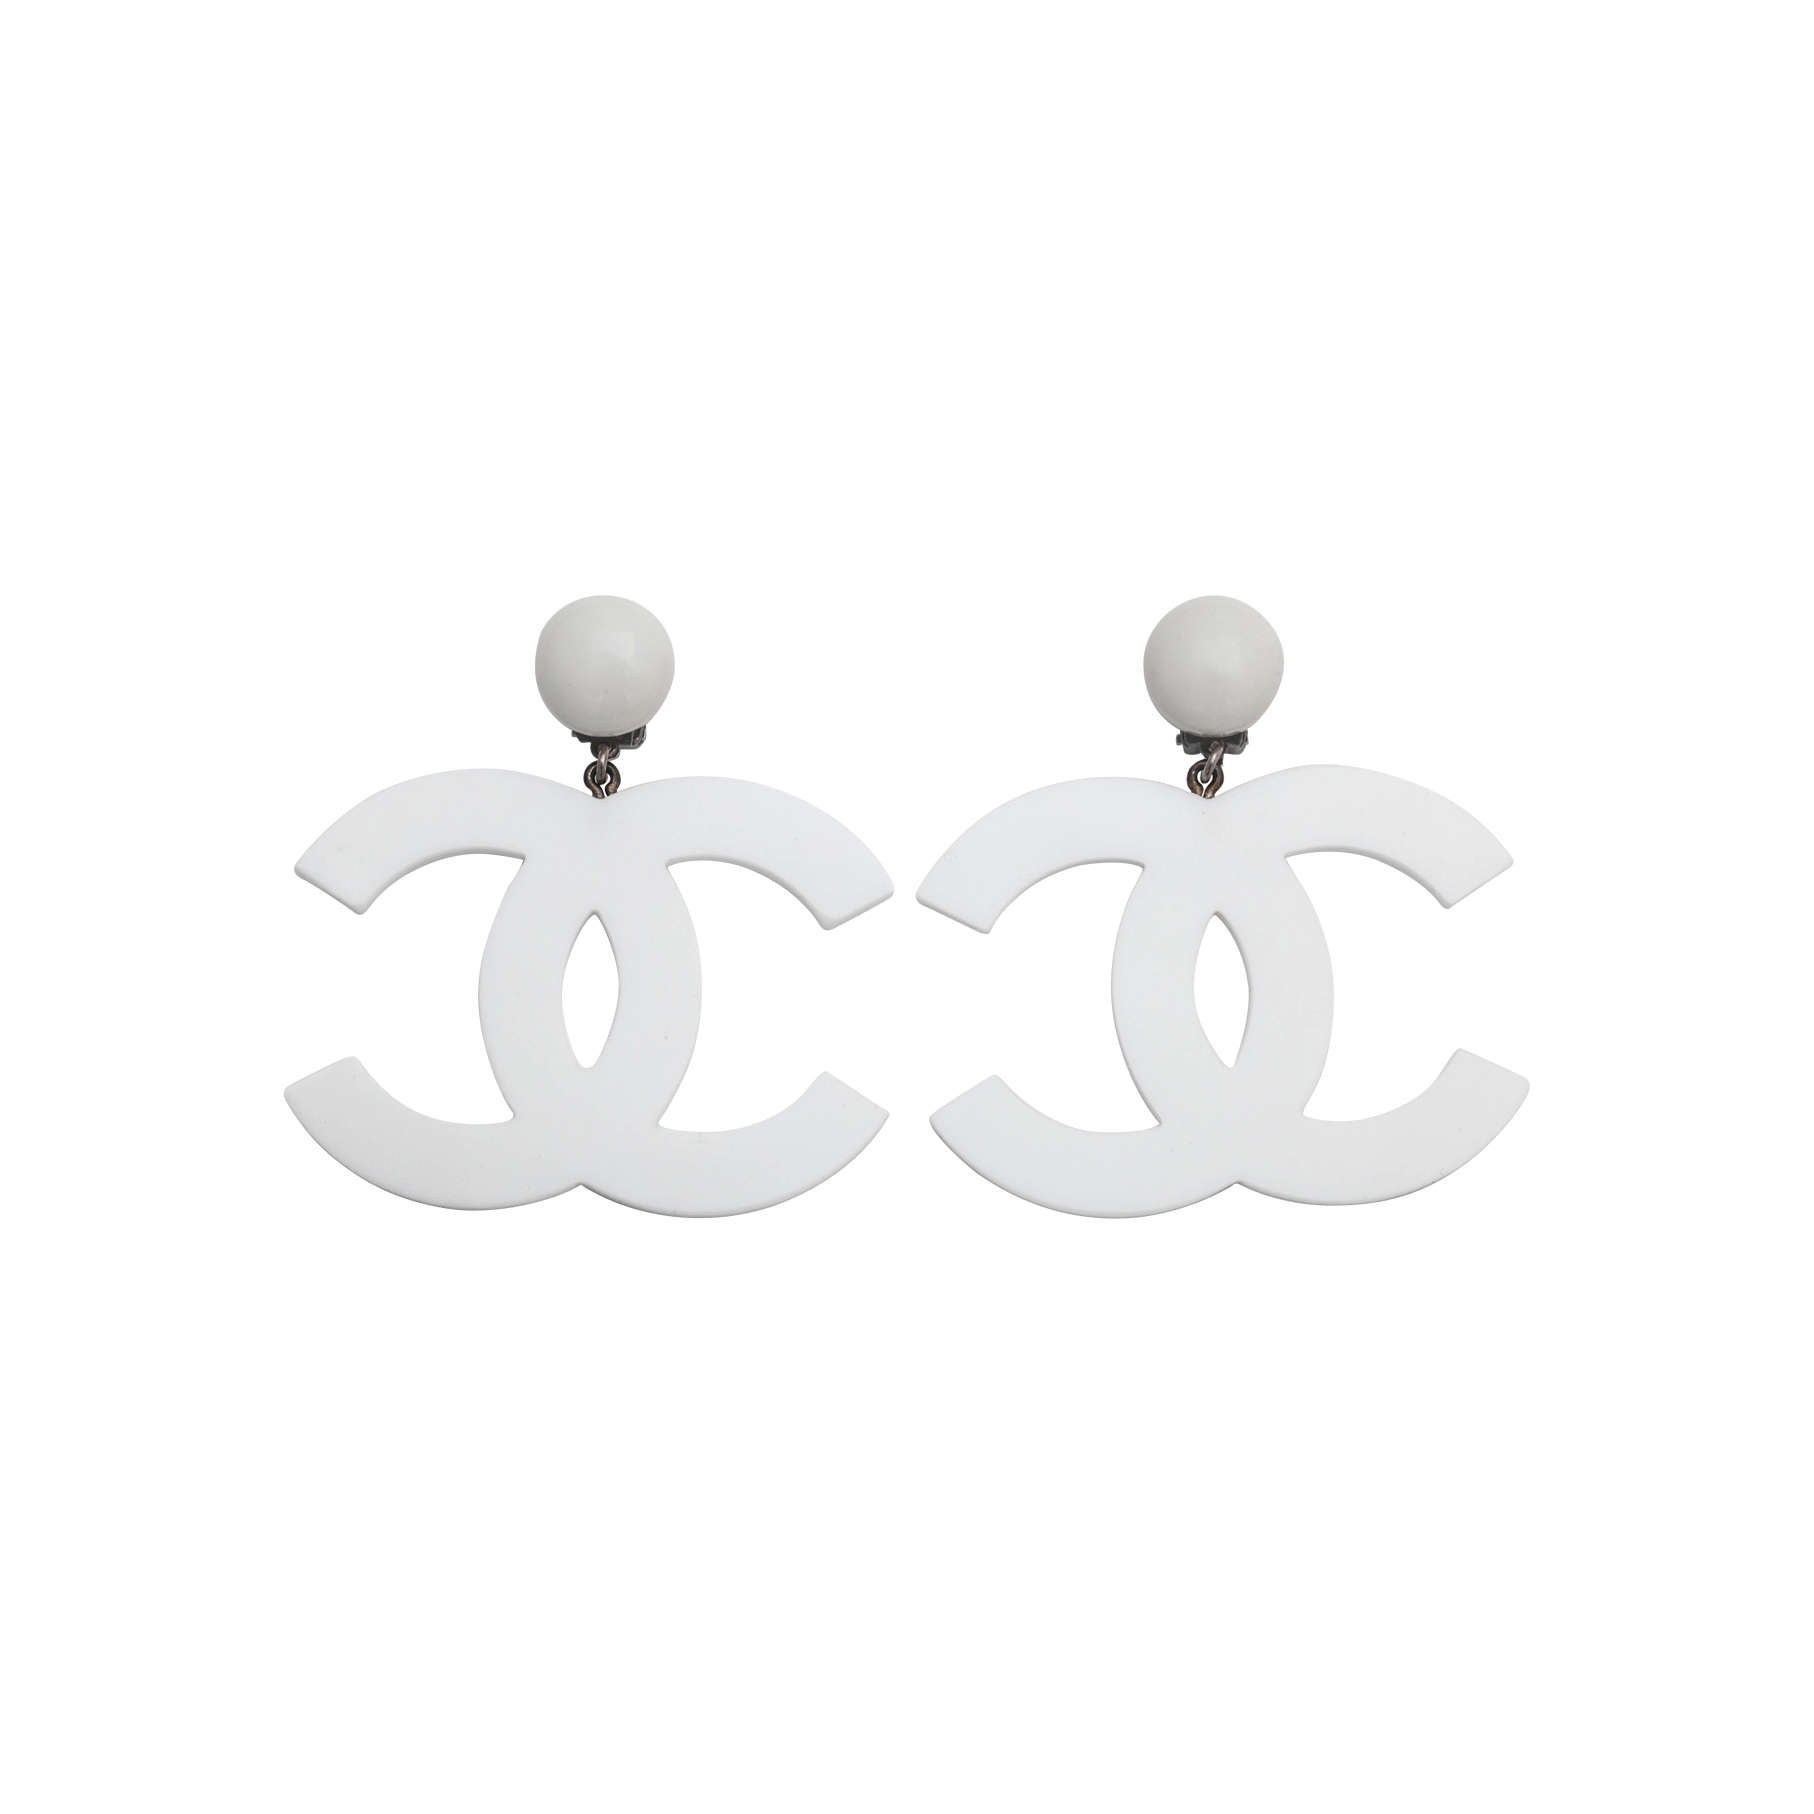 Rare Chanel Large White CC Earrings